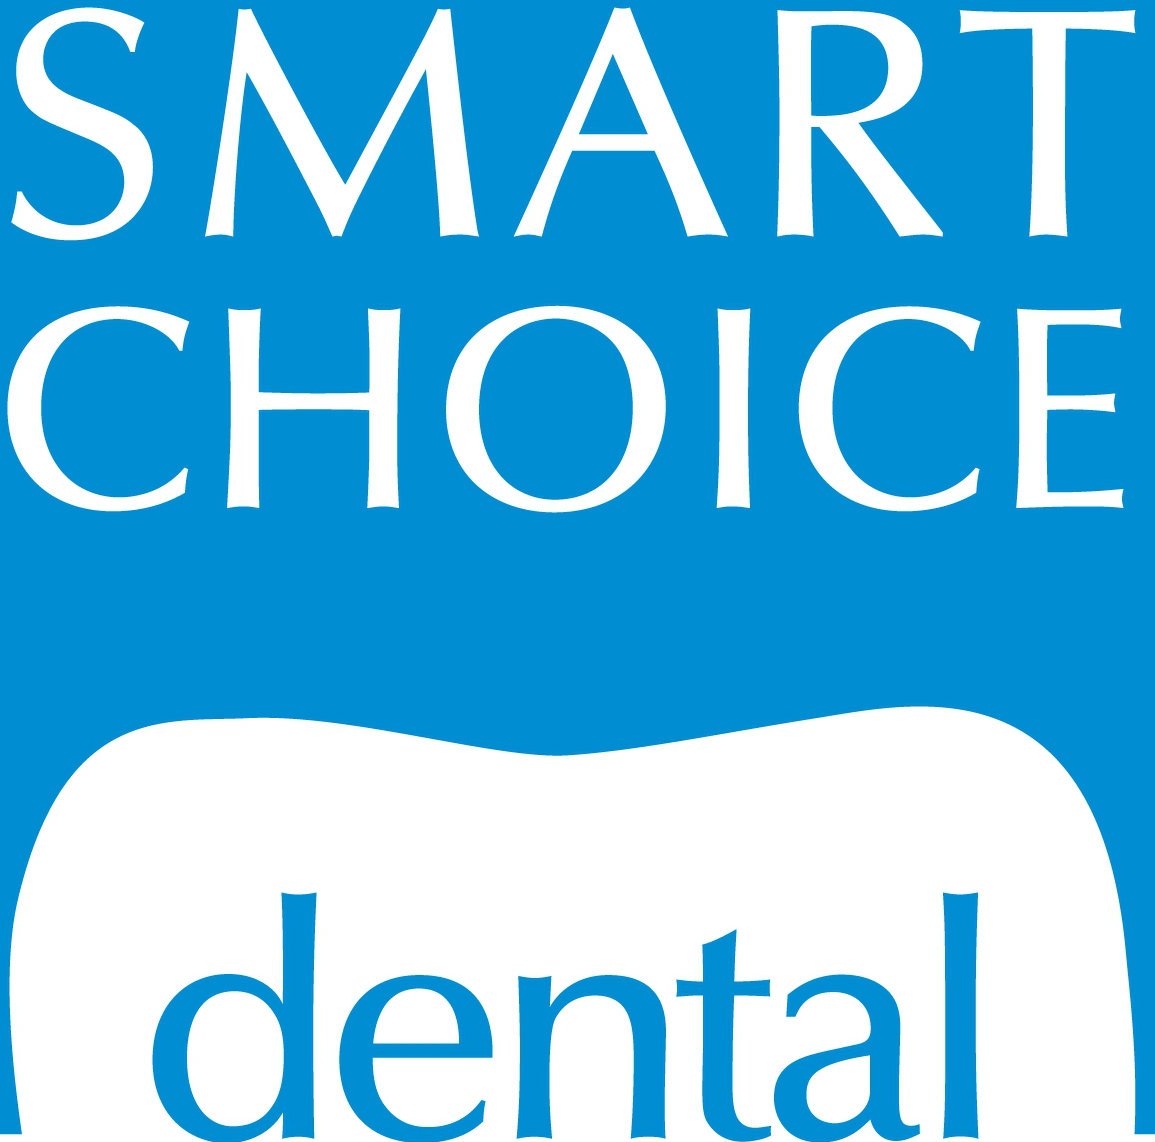 Smart Choice Dental - Dentists Hobart 0